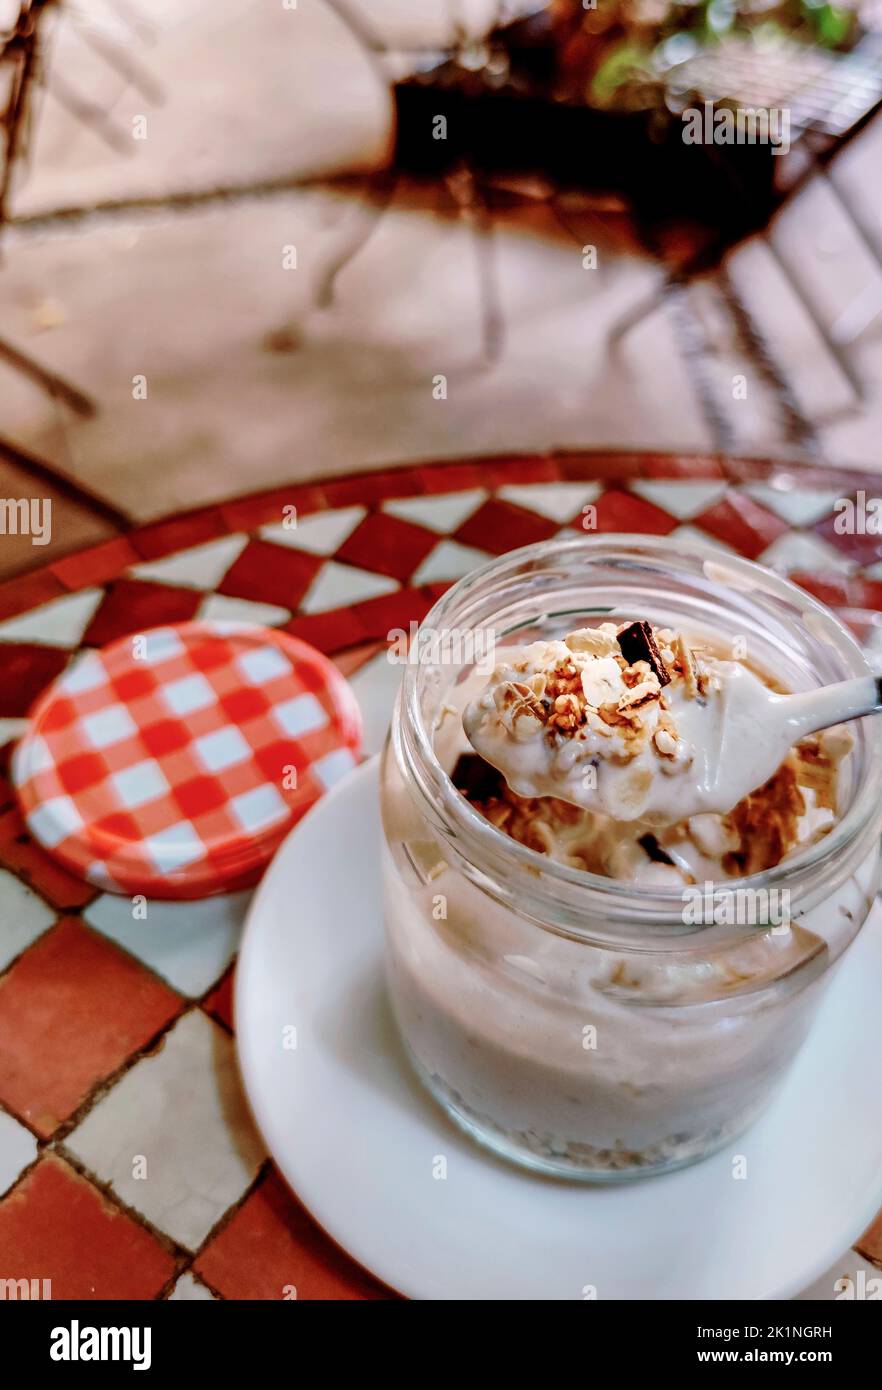 Spoonful of yogurt with muesli from glass jar. Mediterranean style background Stock Photo